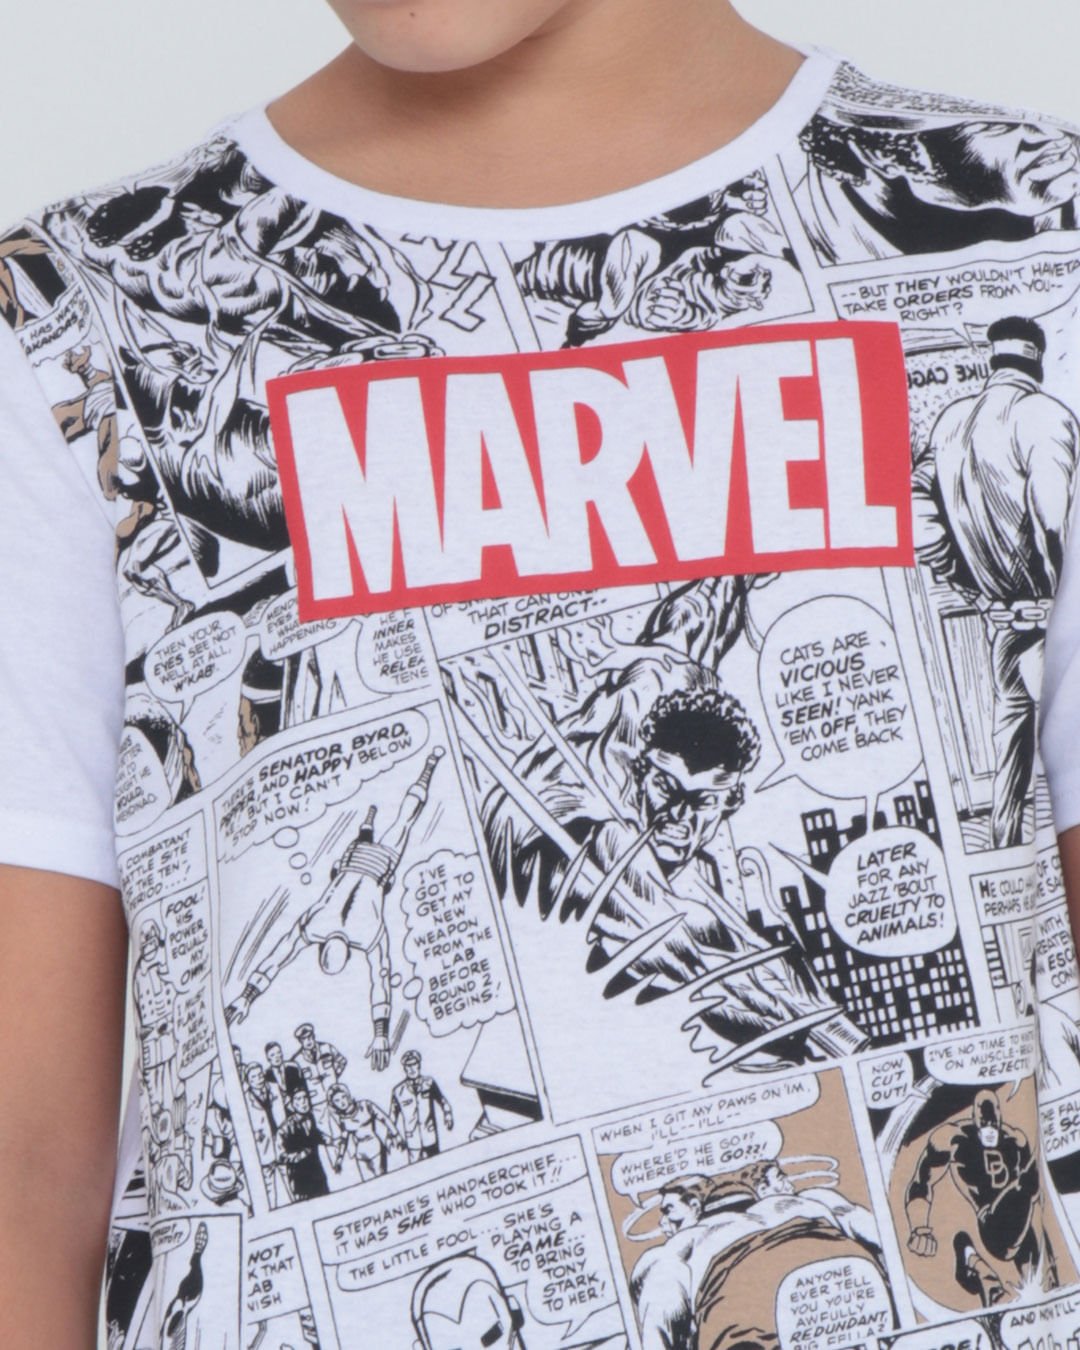 Camiseta-Jm487-Mc-M1016-Marvel---Branco